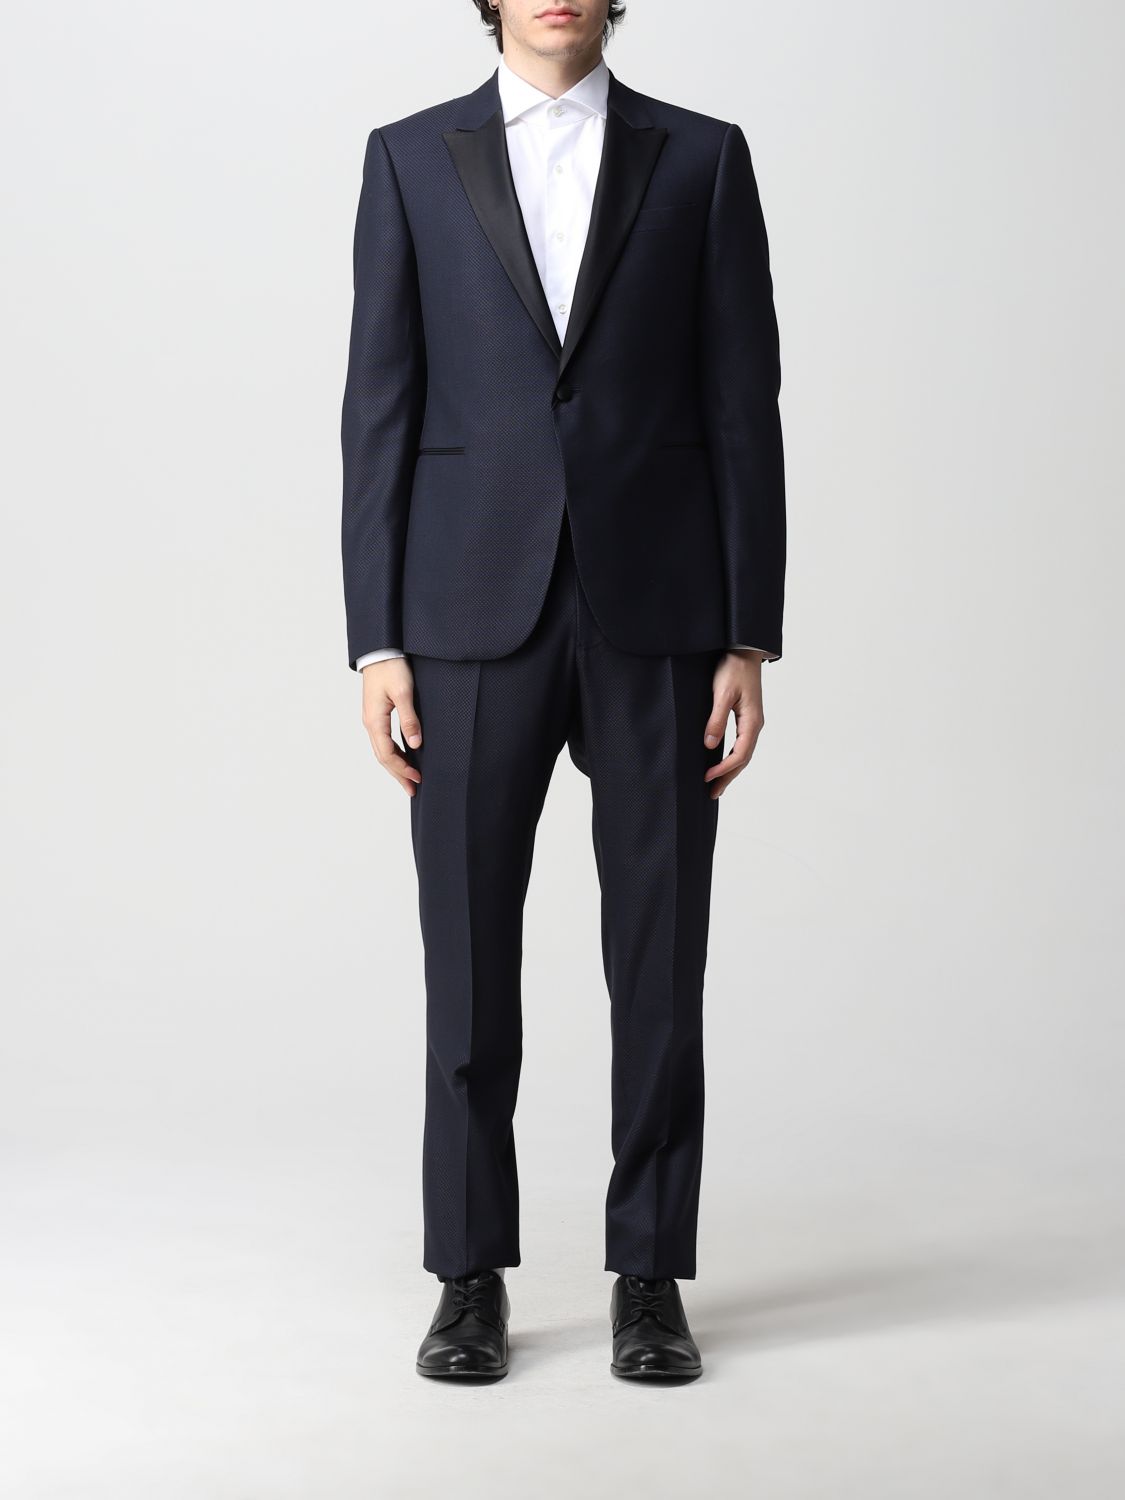 Emporio Armani Outlet: suit for man - Blue | Emporio Armani suit  I1VMURI1576 online on 